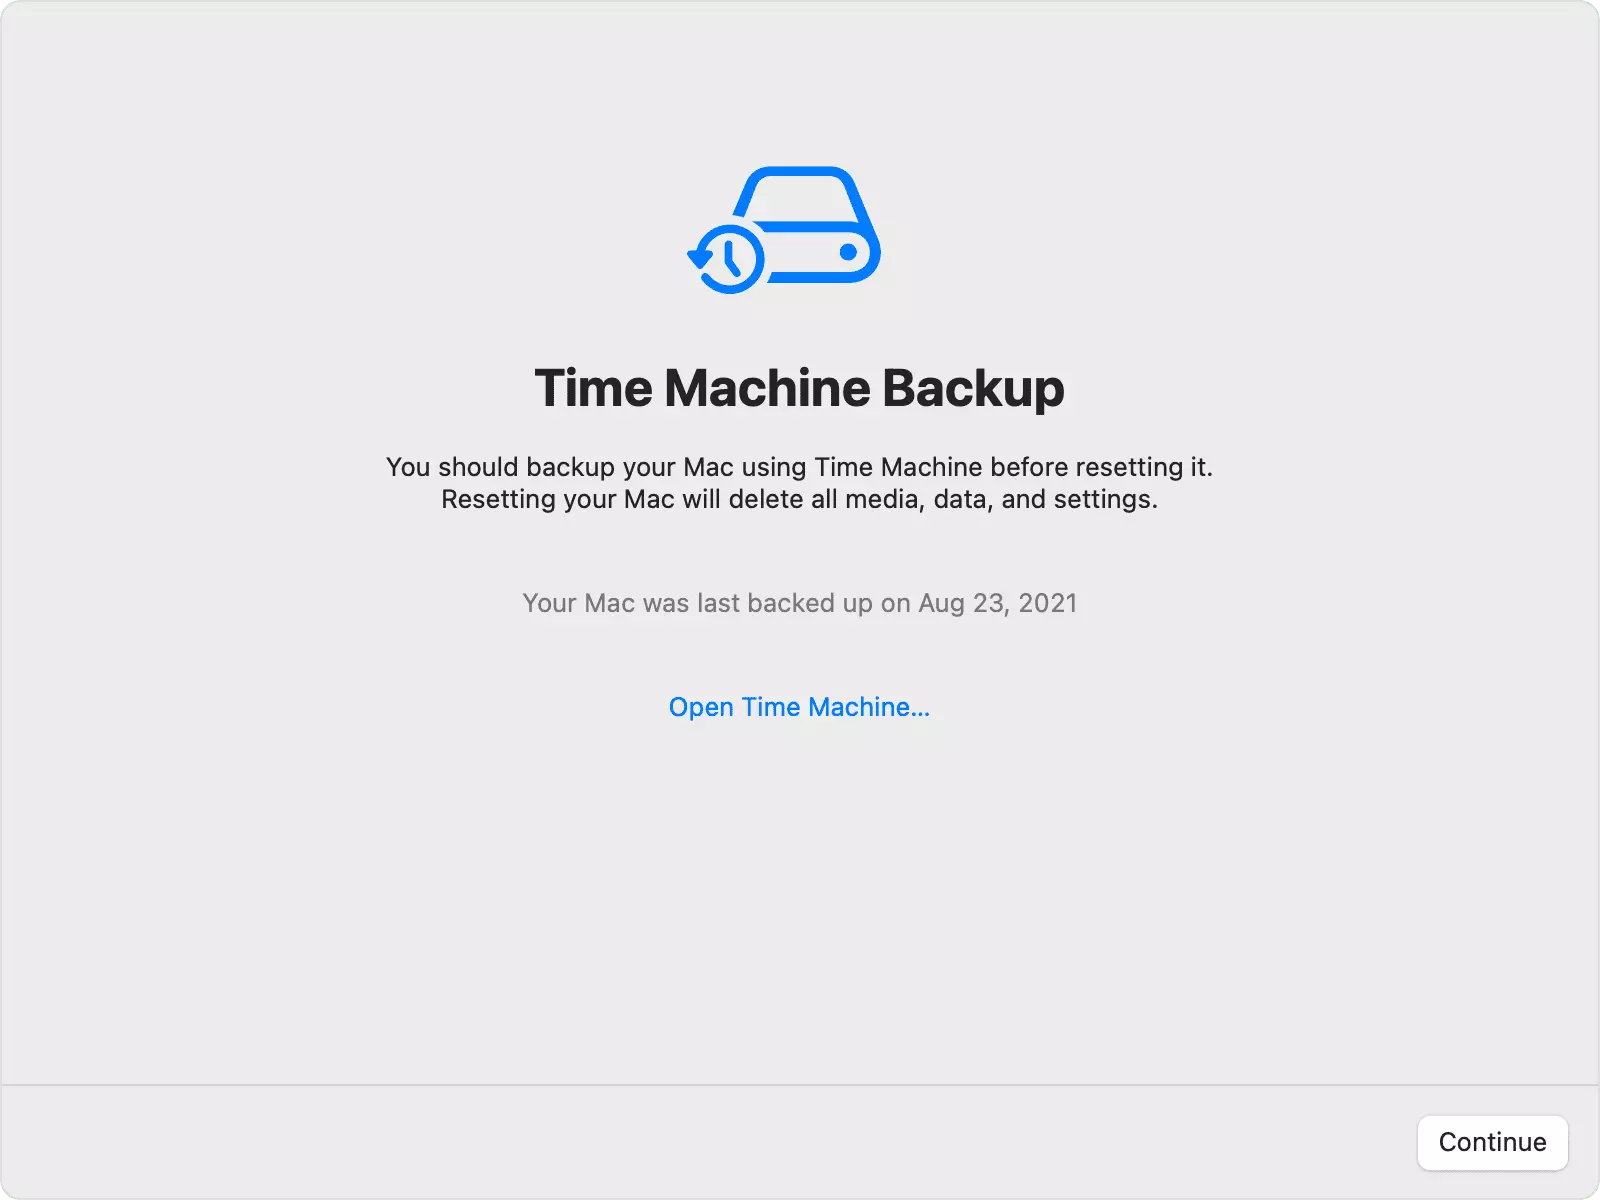 Apple’s Time Machine